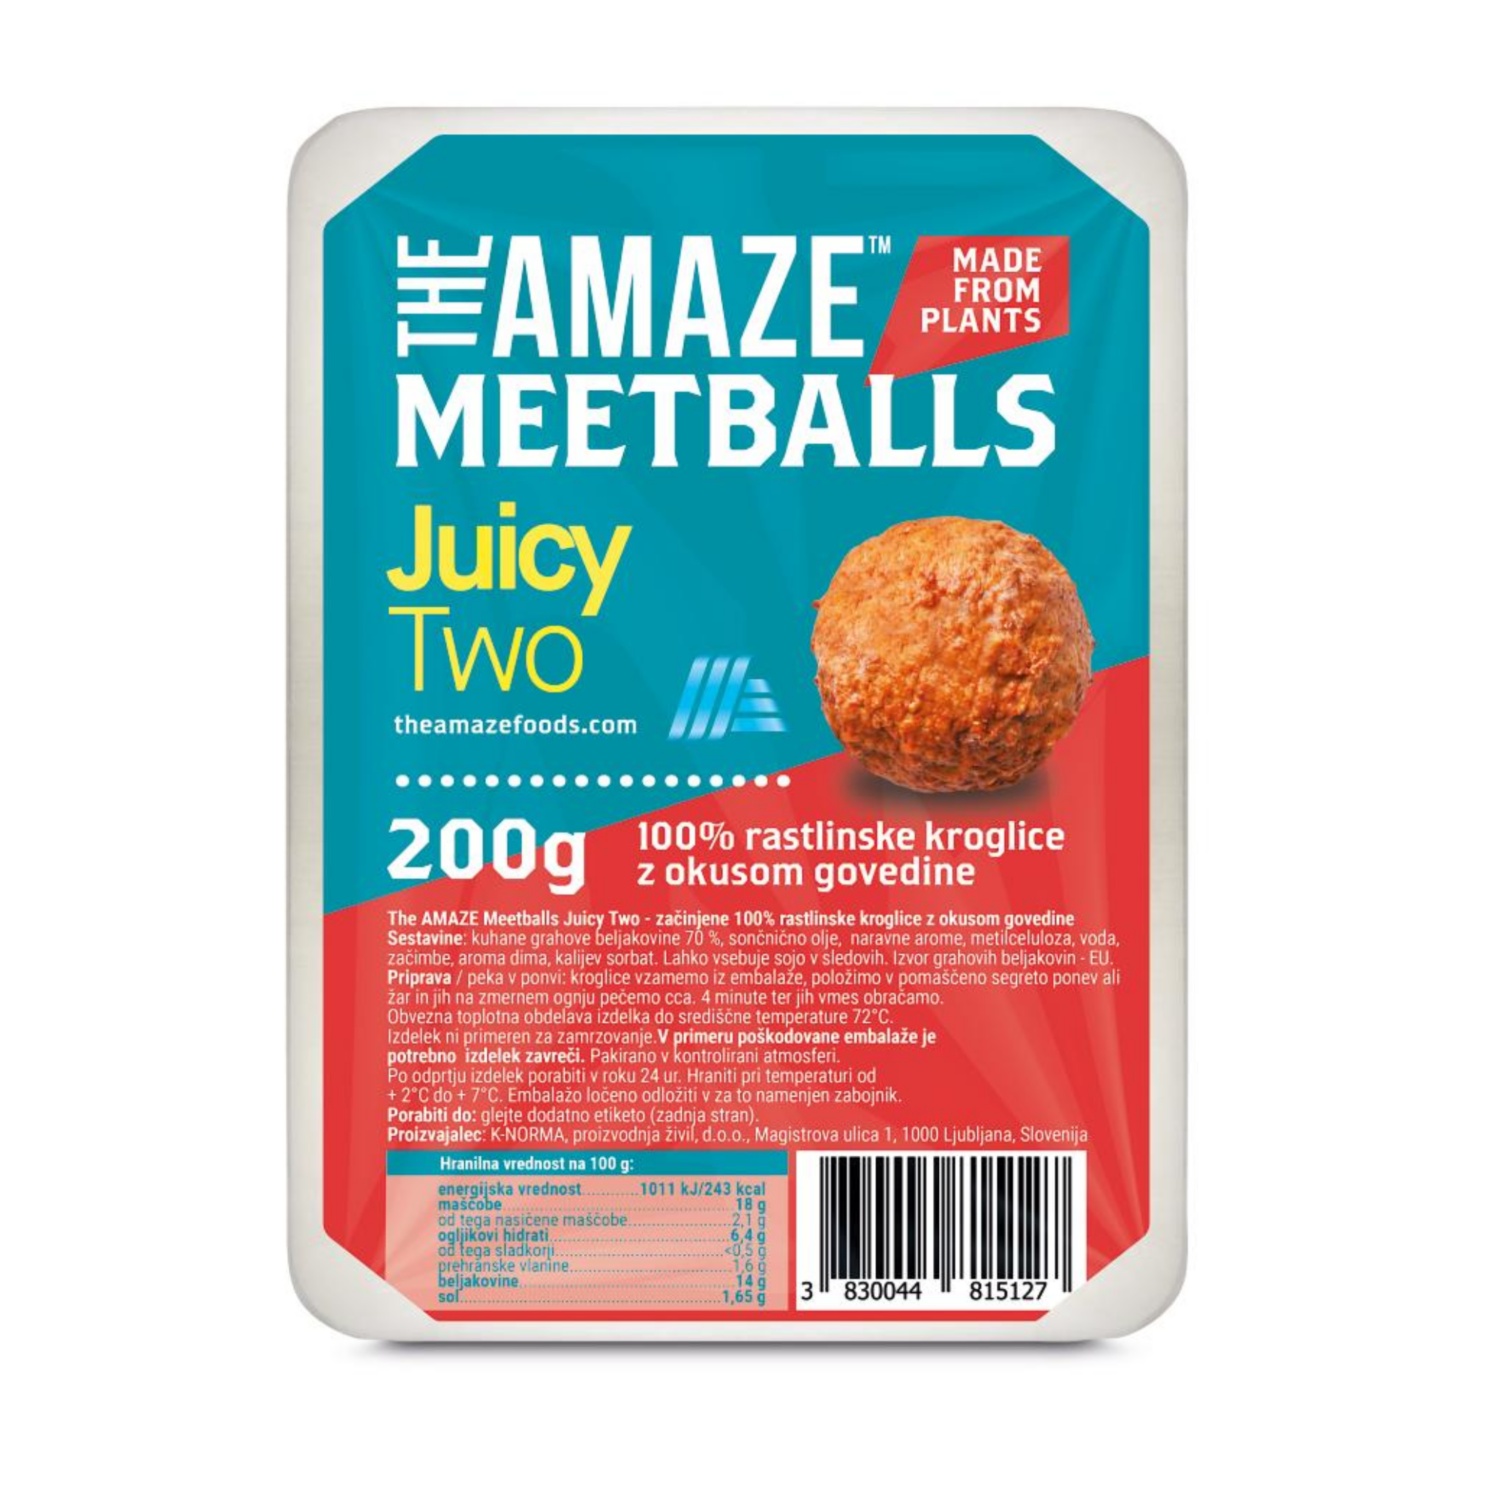 Amaze meetballs, Juicy two